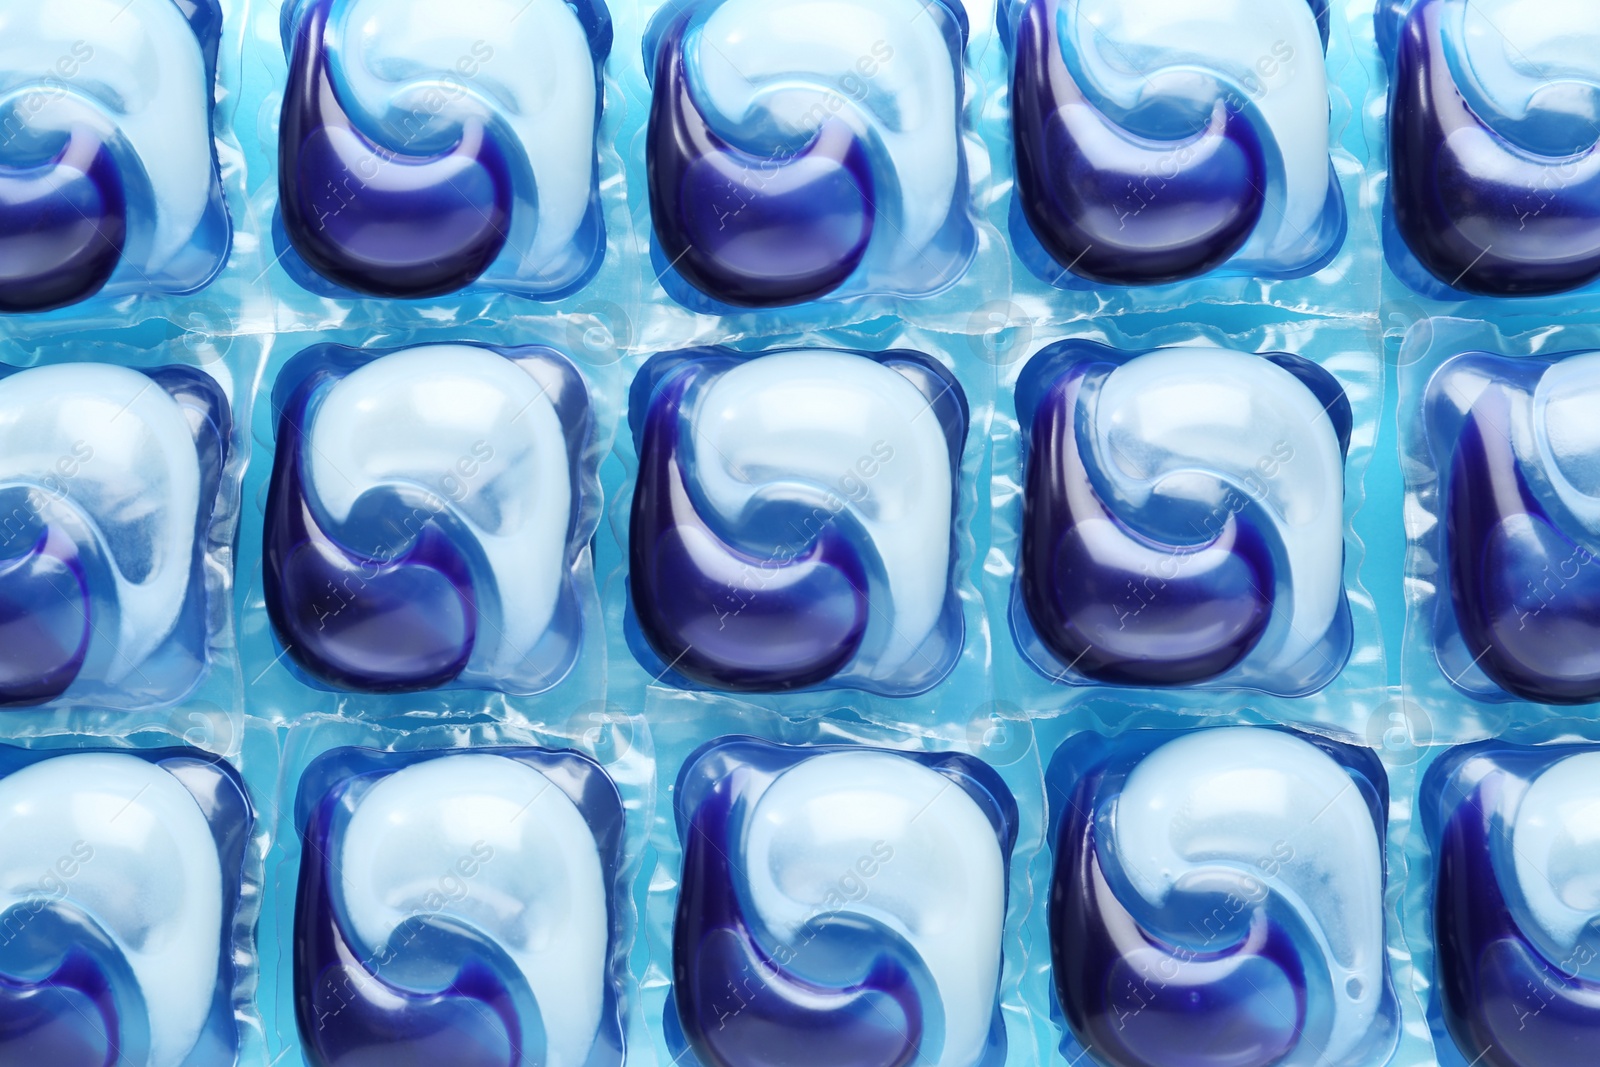 Photo of Laundry capsules on blue background, flat lay